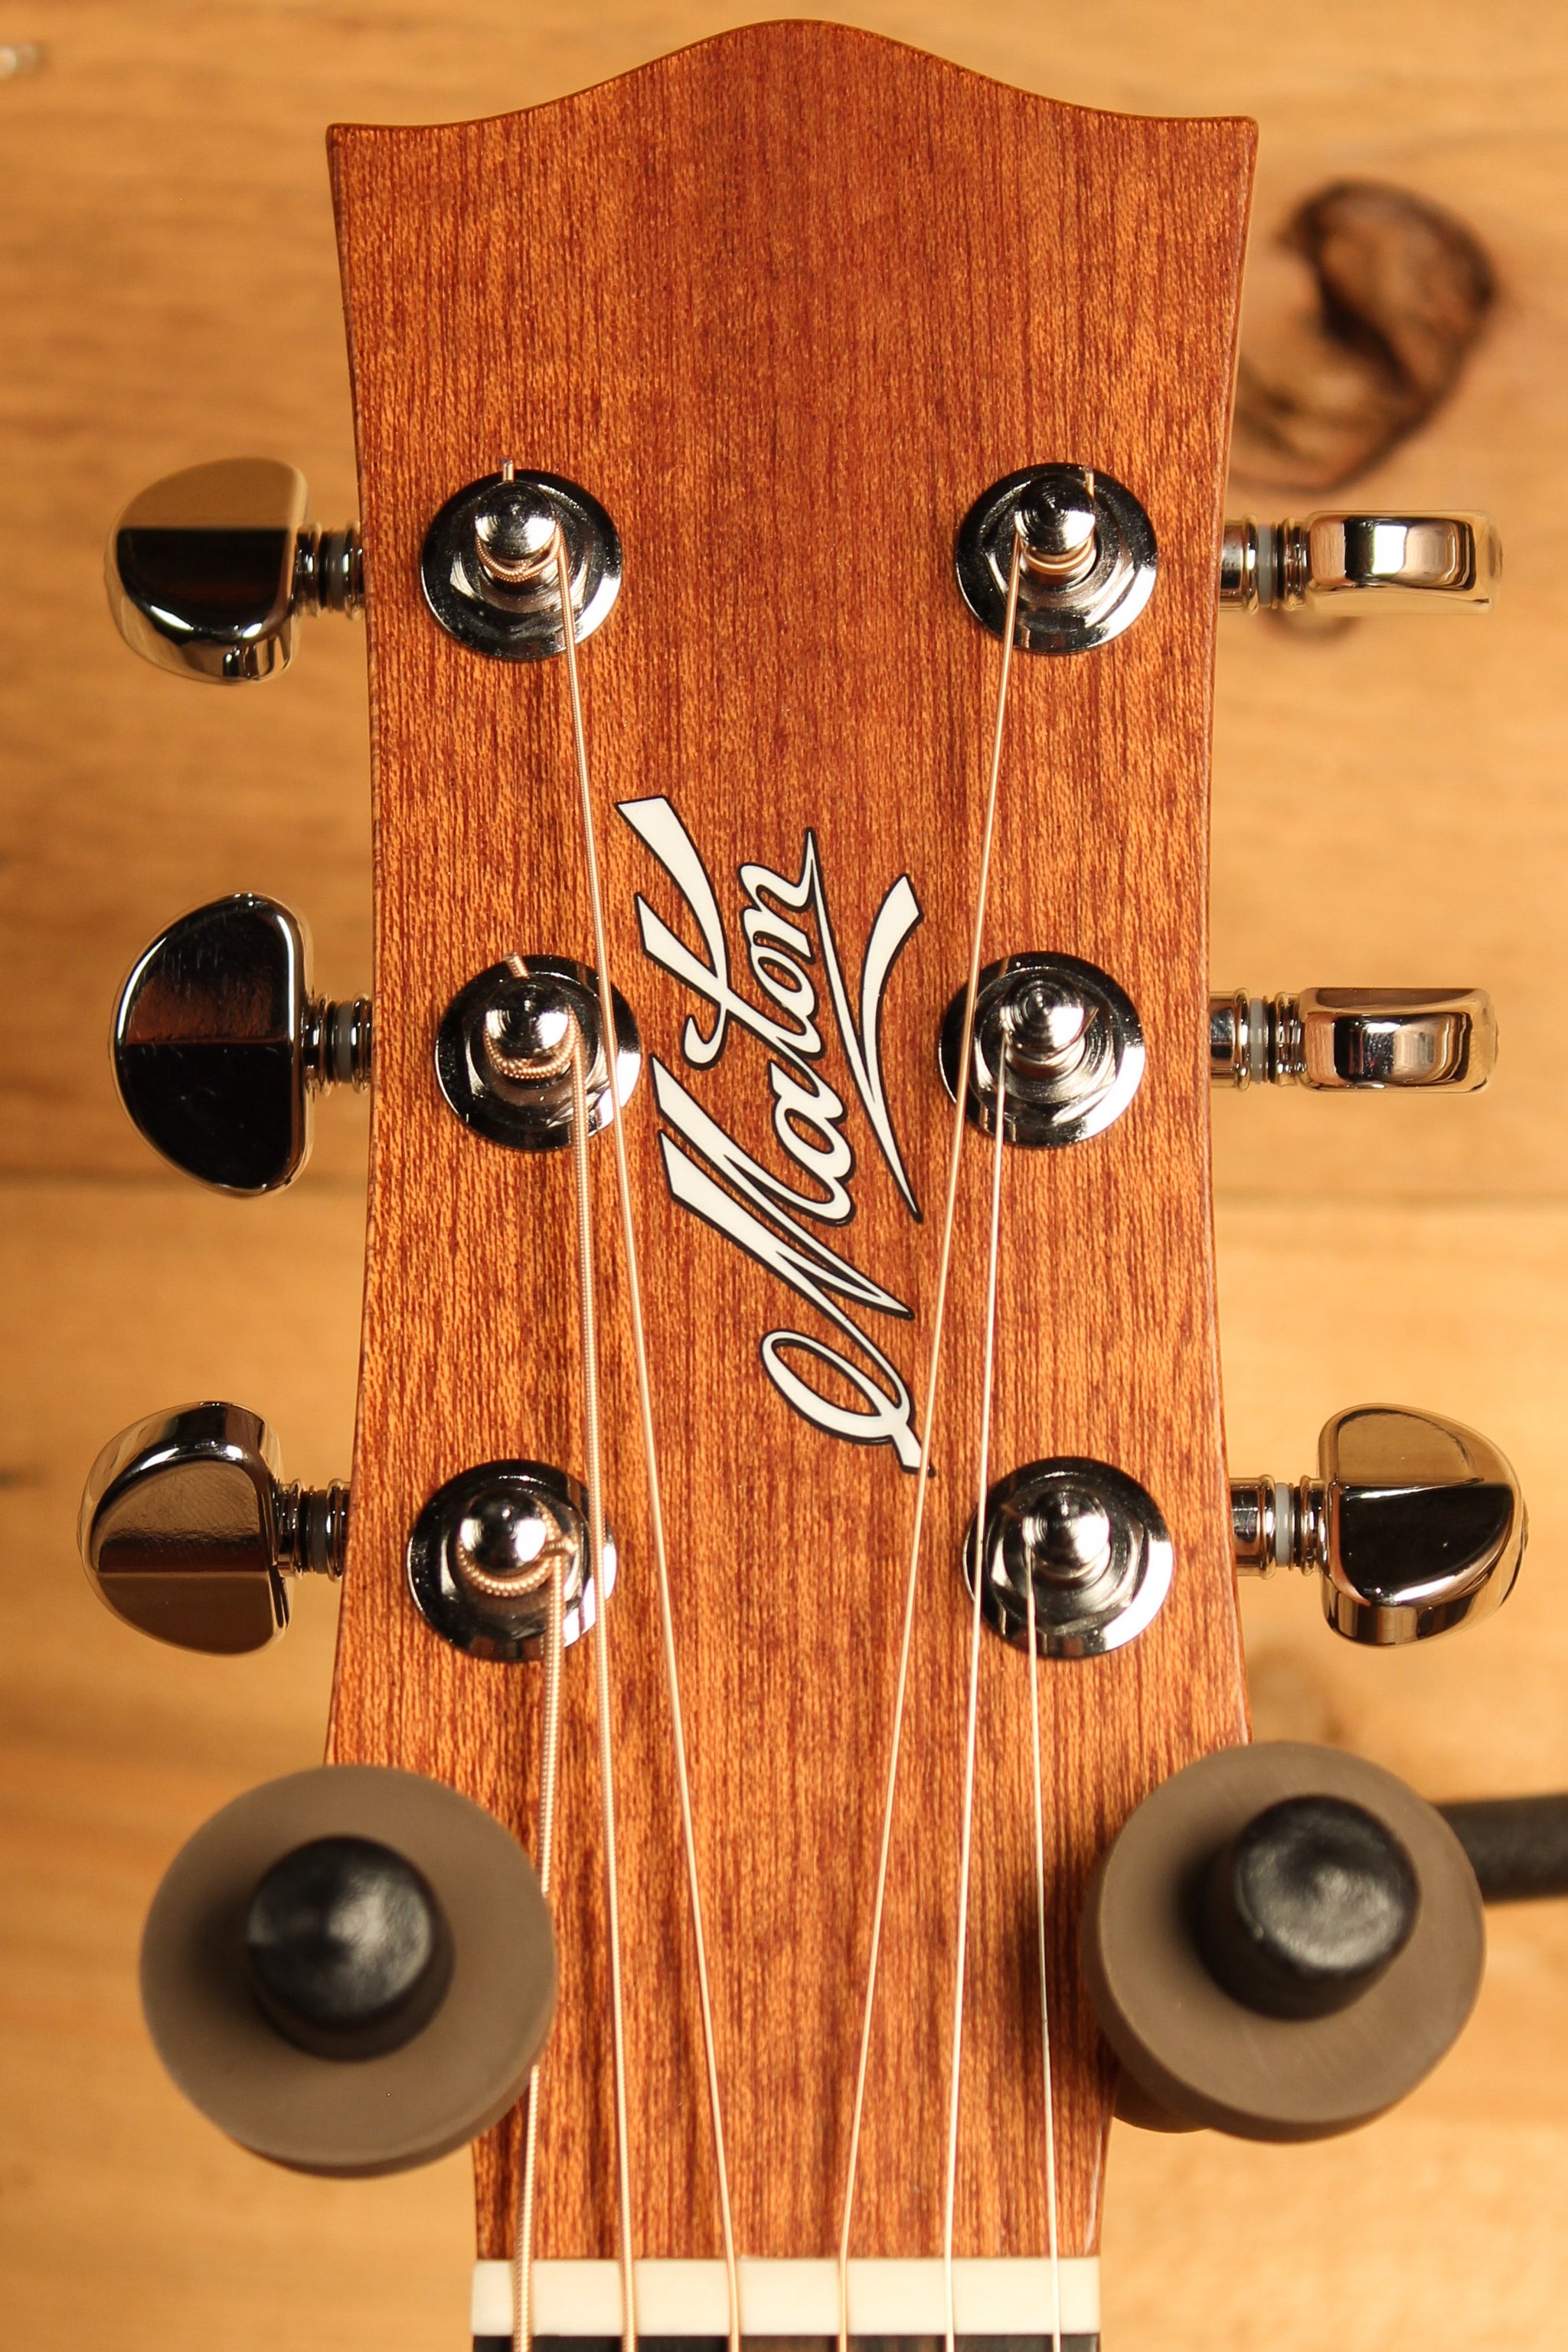 Maton SRS808 Guitar with Western Red Cedar Blackwood and Cutaway ID-13699 - Artisan Guitars